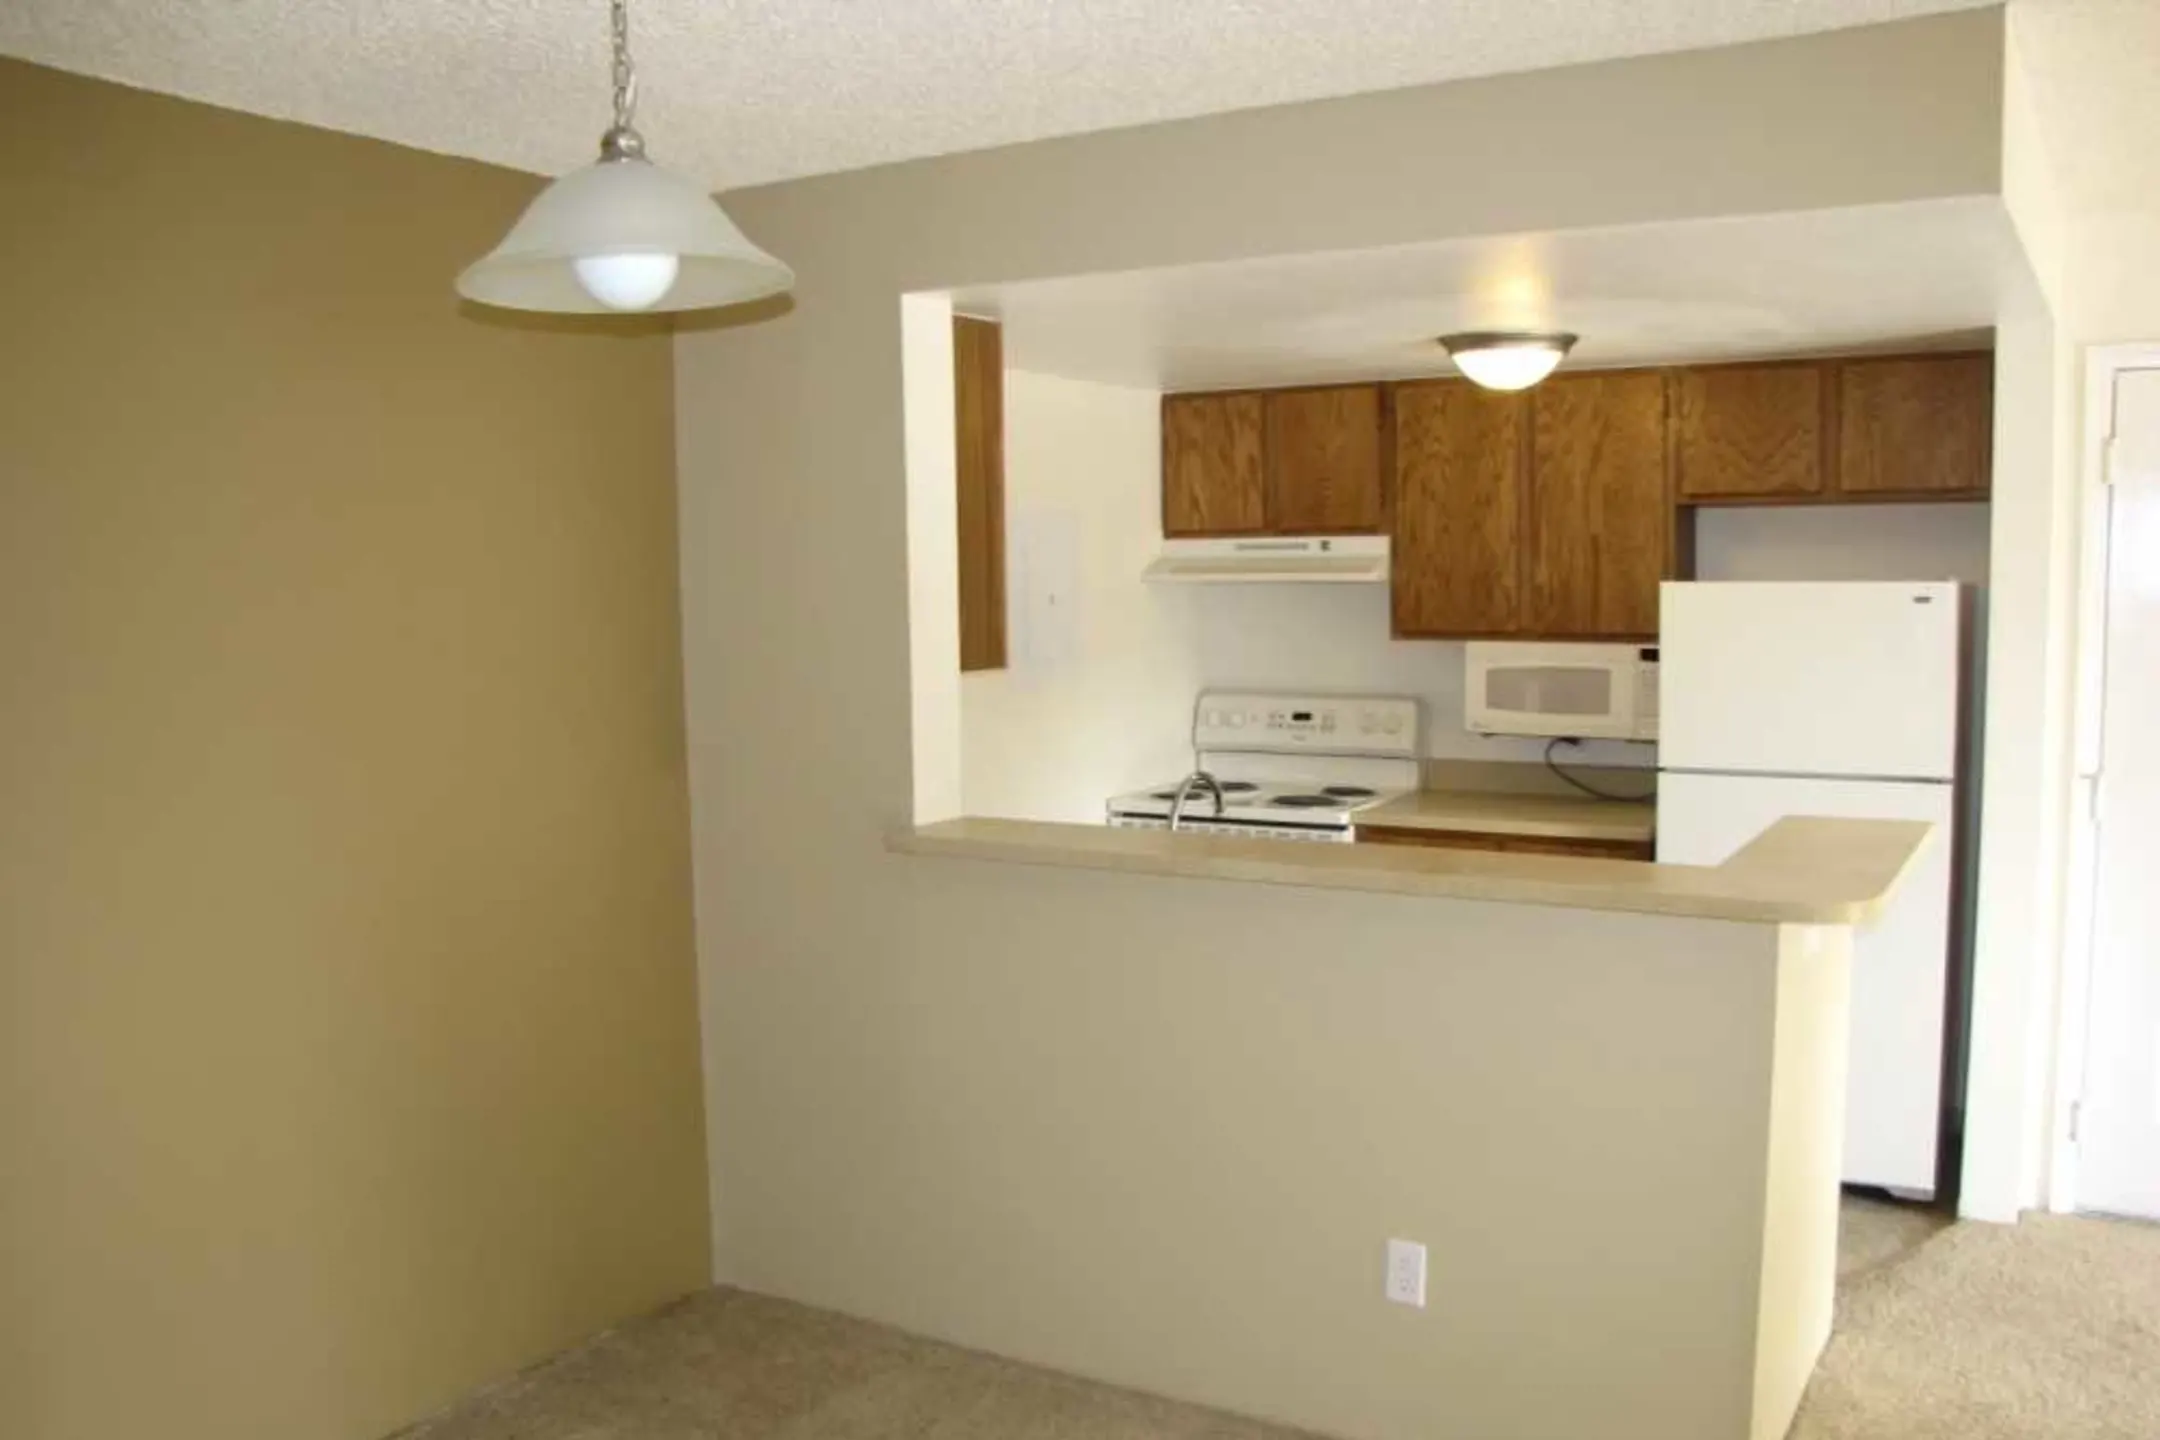 Kitchen - Hunters Run Apartments - Denver, CO